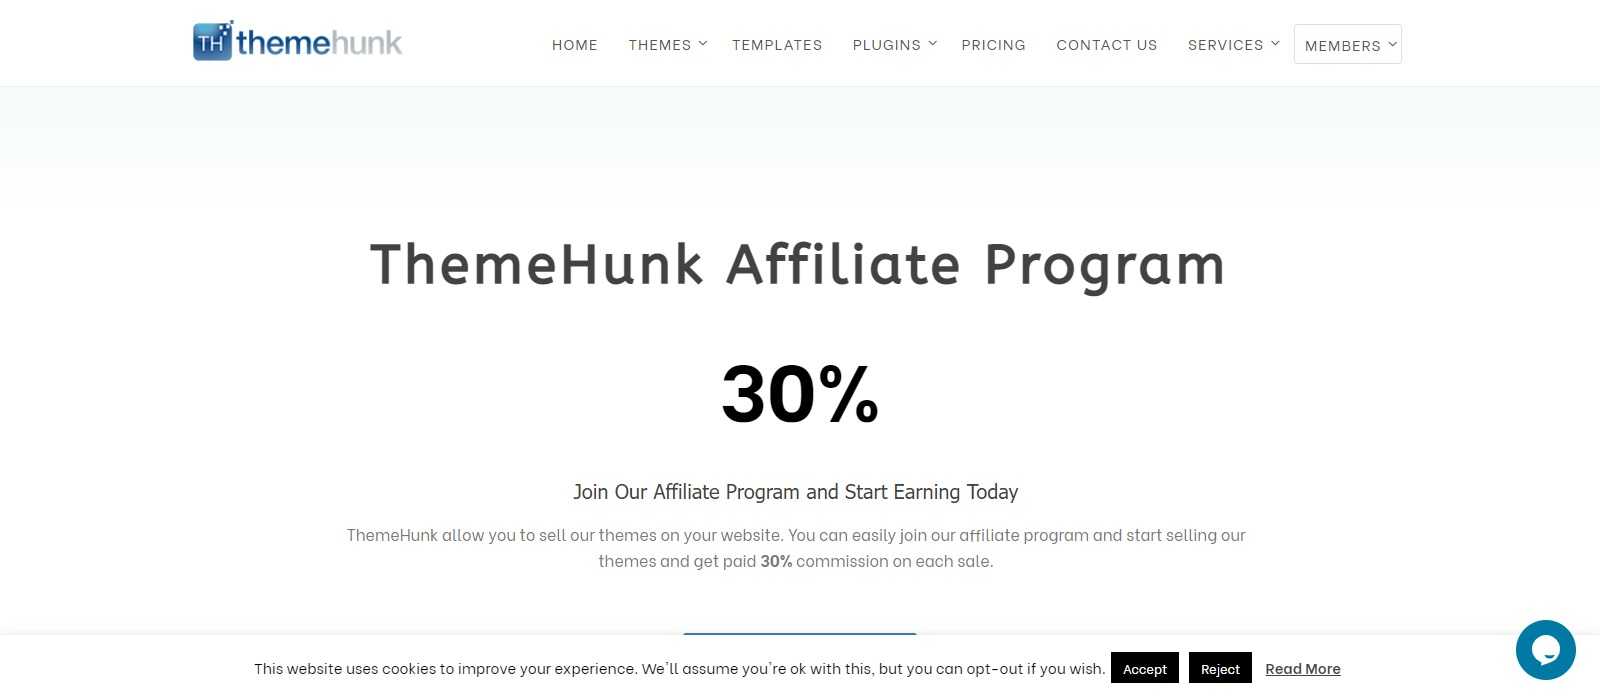 ThemeHunk Affiliates Program Review: Get Earn 30% Commission per sale